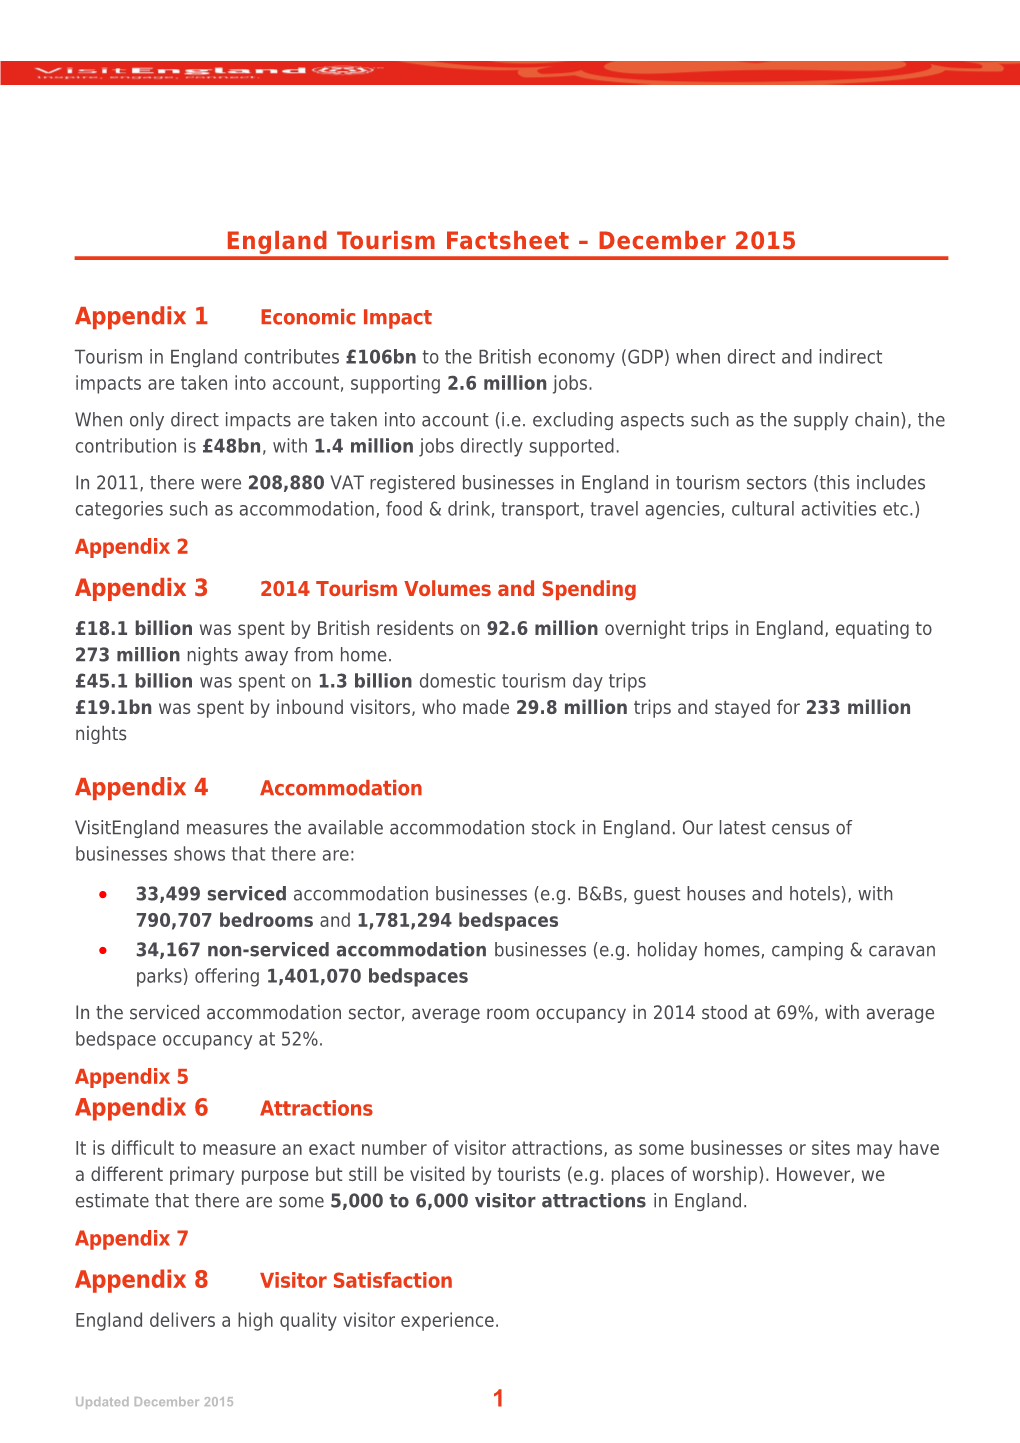 England Tourism Factsheet December 2015